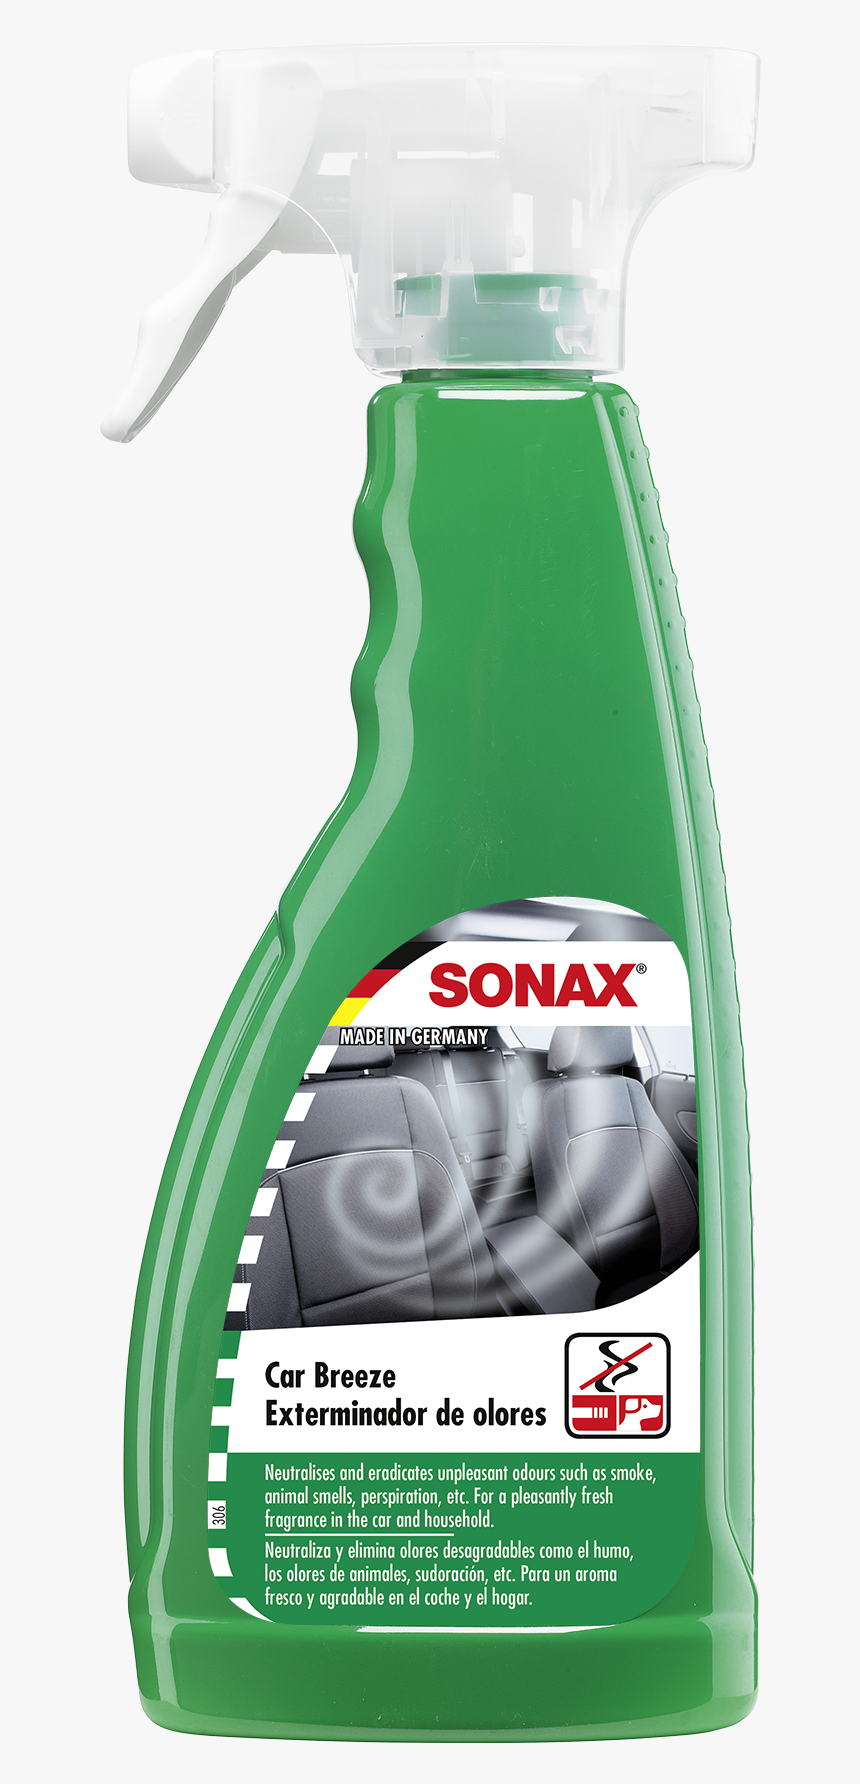 Sonax Car Breeze, HD Png Download, Free Download